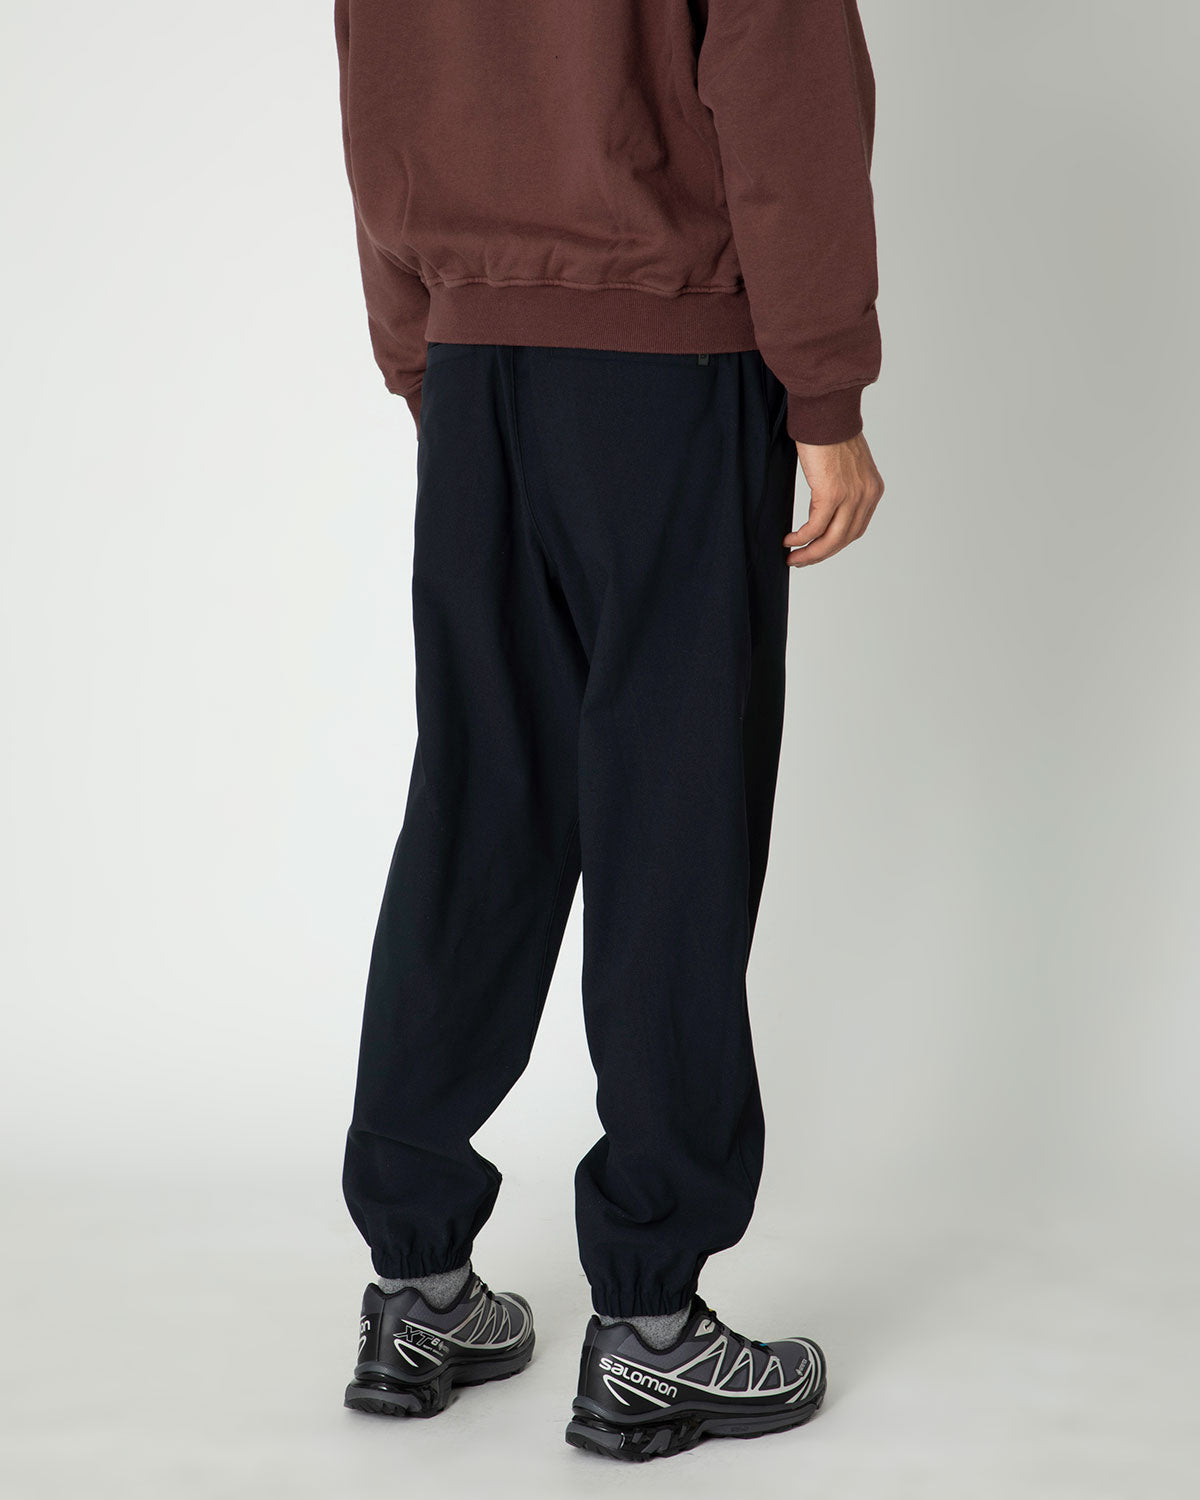 ennoy daiwapier39 tech flex jersey pants¥28000は難しいでしょうか